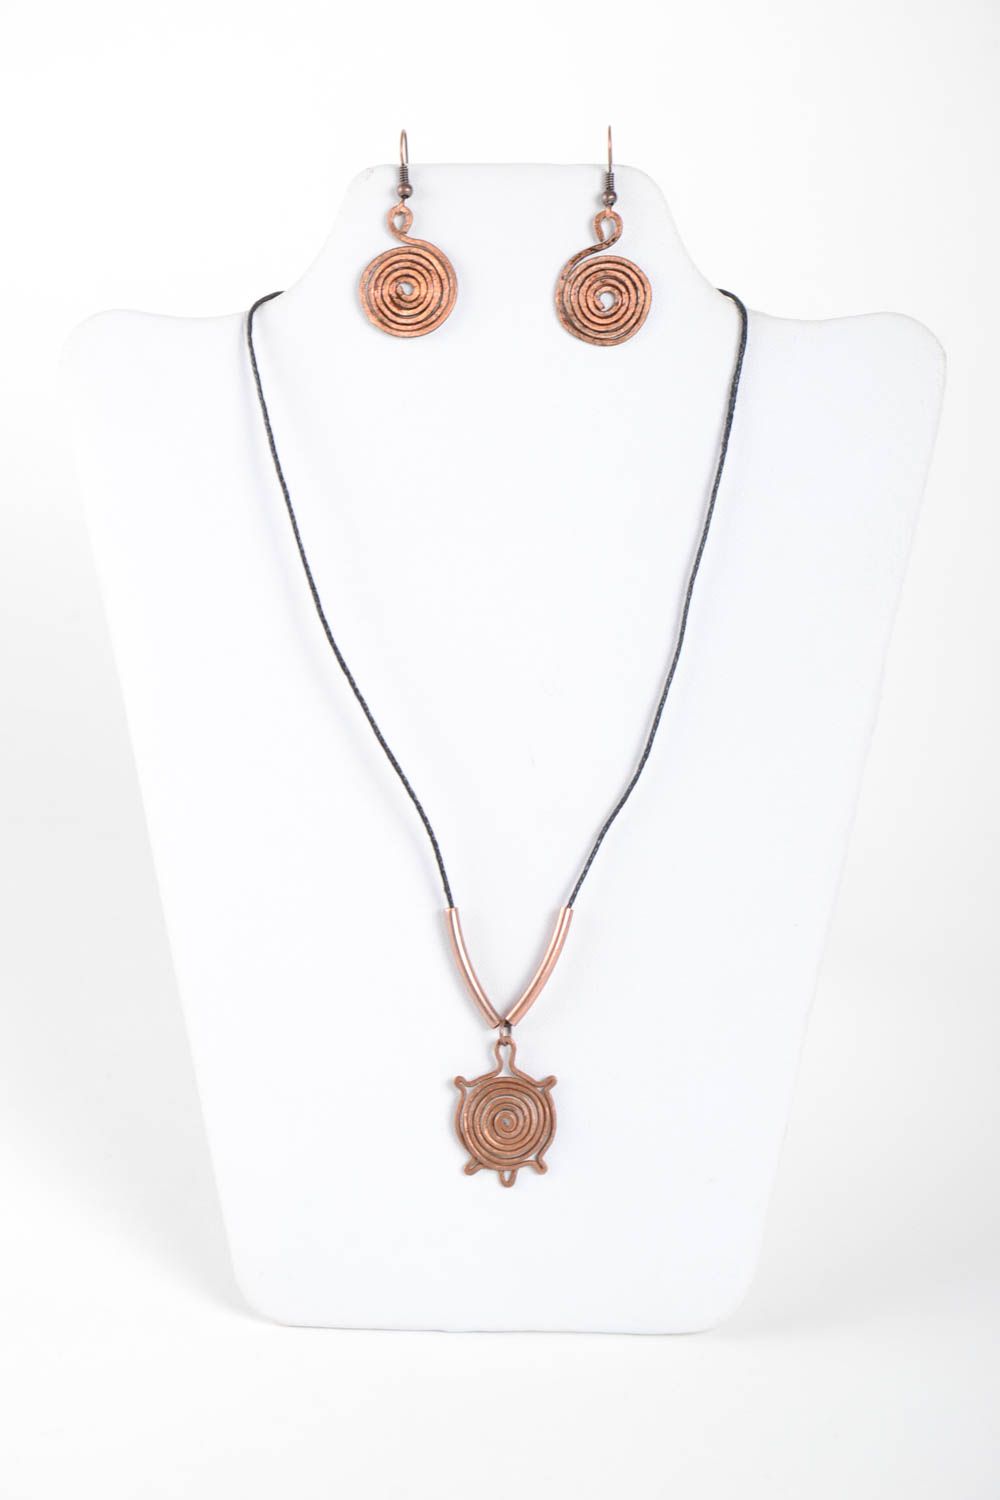 Handmade copper jewelry wire wrap earrings copper pendant copper jewelry photo 2